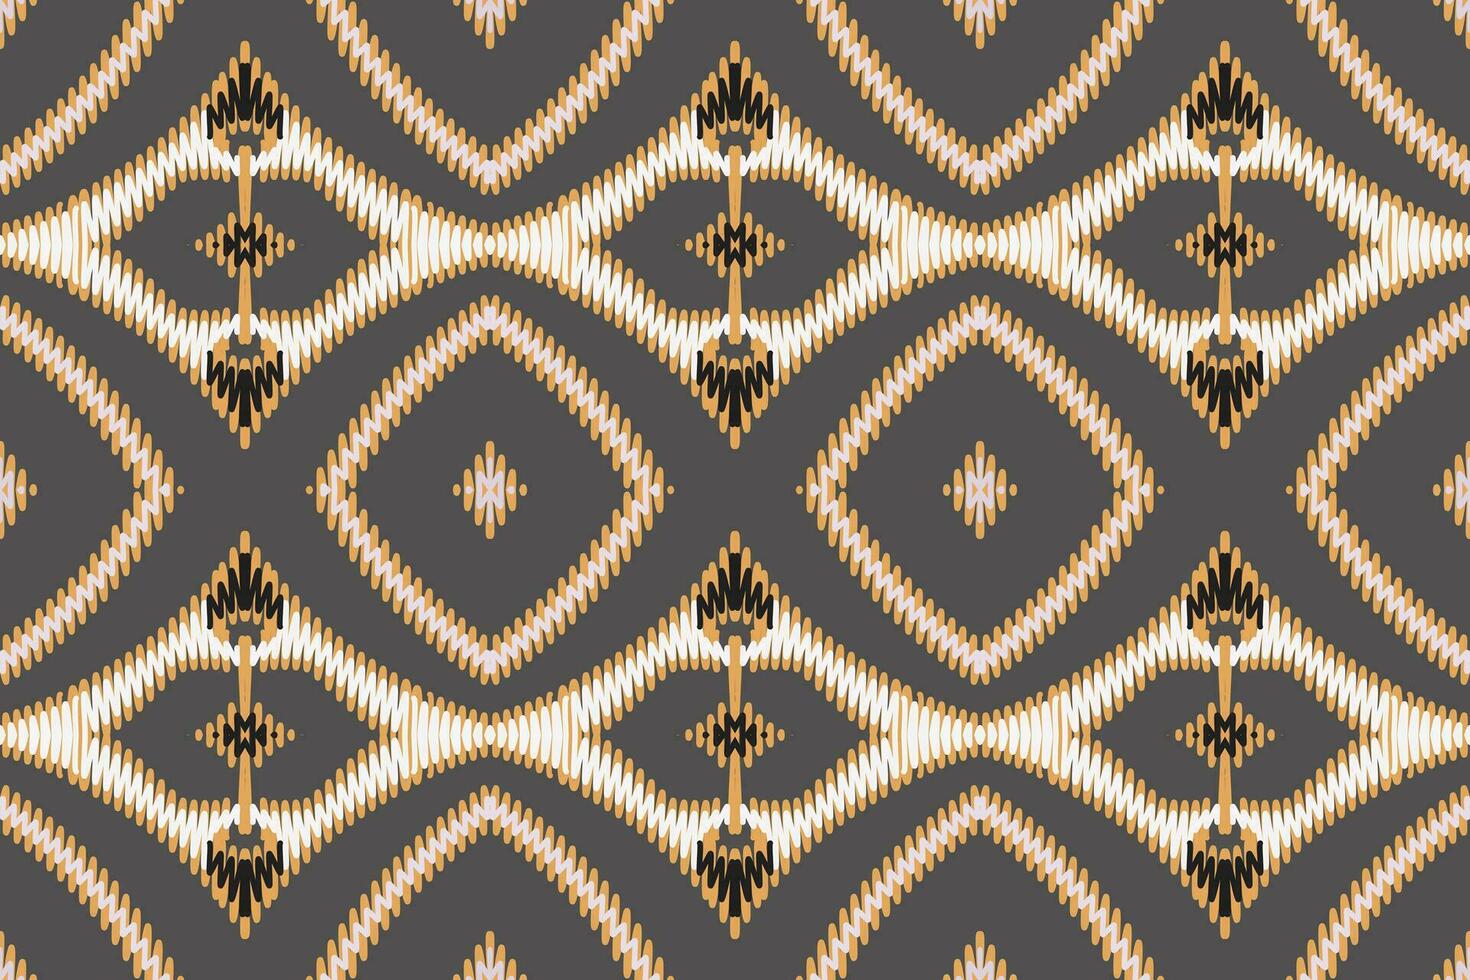 Tie dye Pattern Seamless Native American, Motif embroidery, Ikat embroidery vector Design for Print vyshyvanka placemat quilt sarong sarong beach kurtis Indian motifs